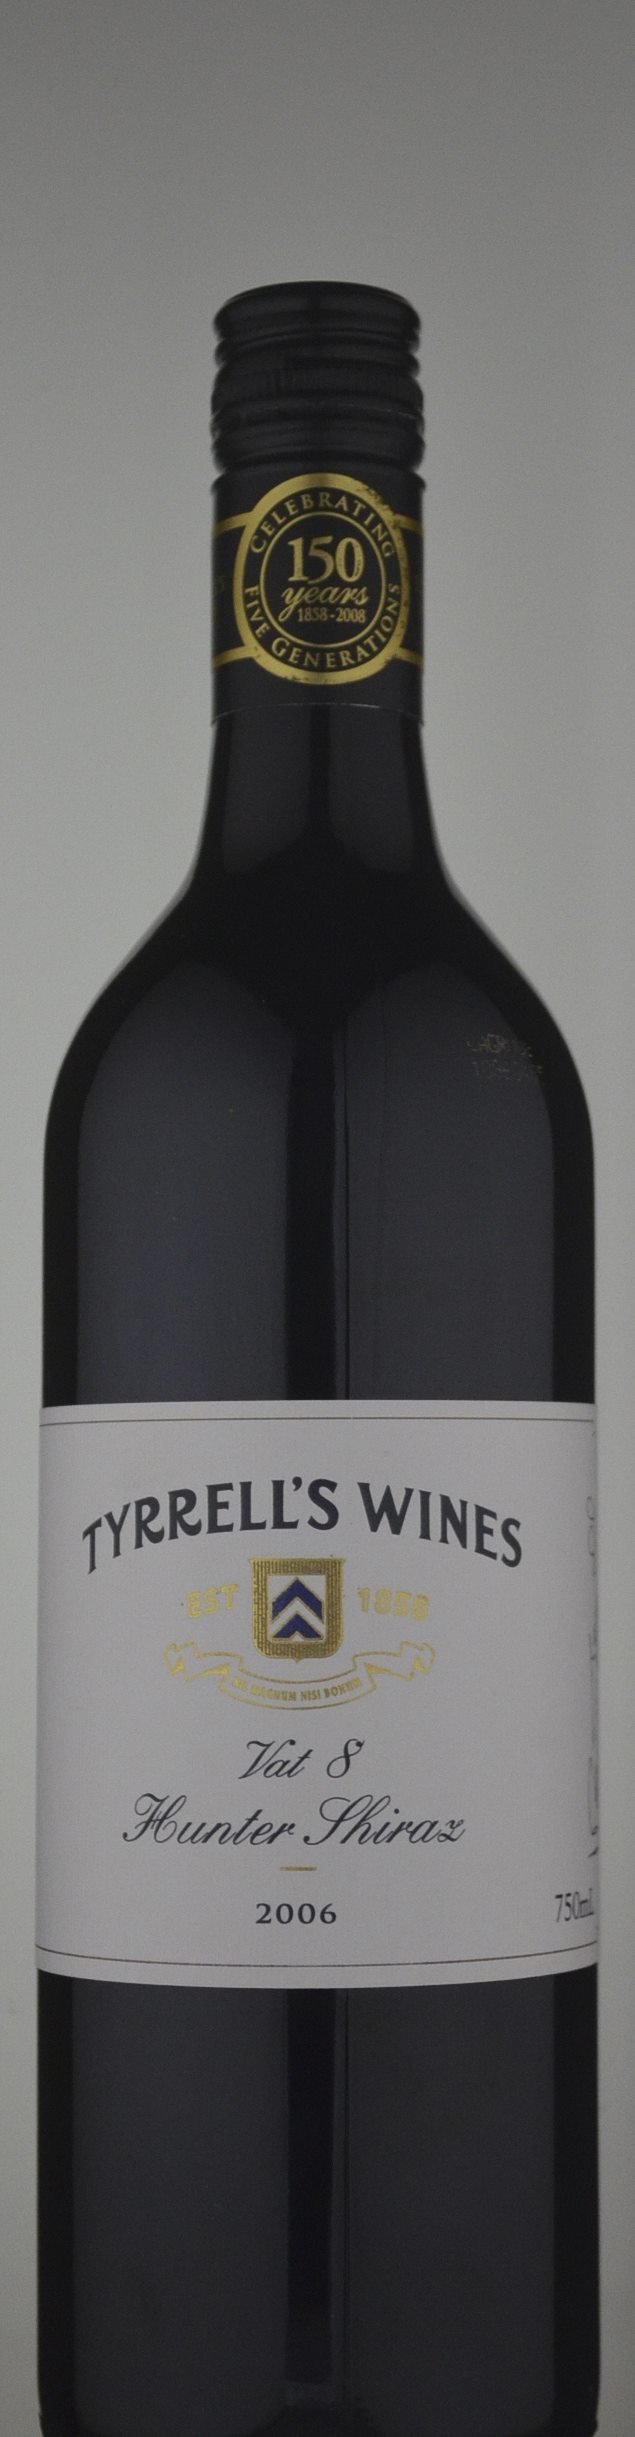 Tyrrell's Wines Vat 8 Shiraz 2006